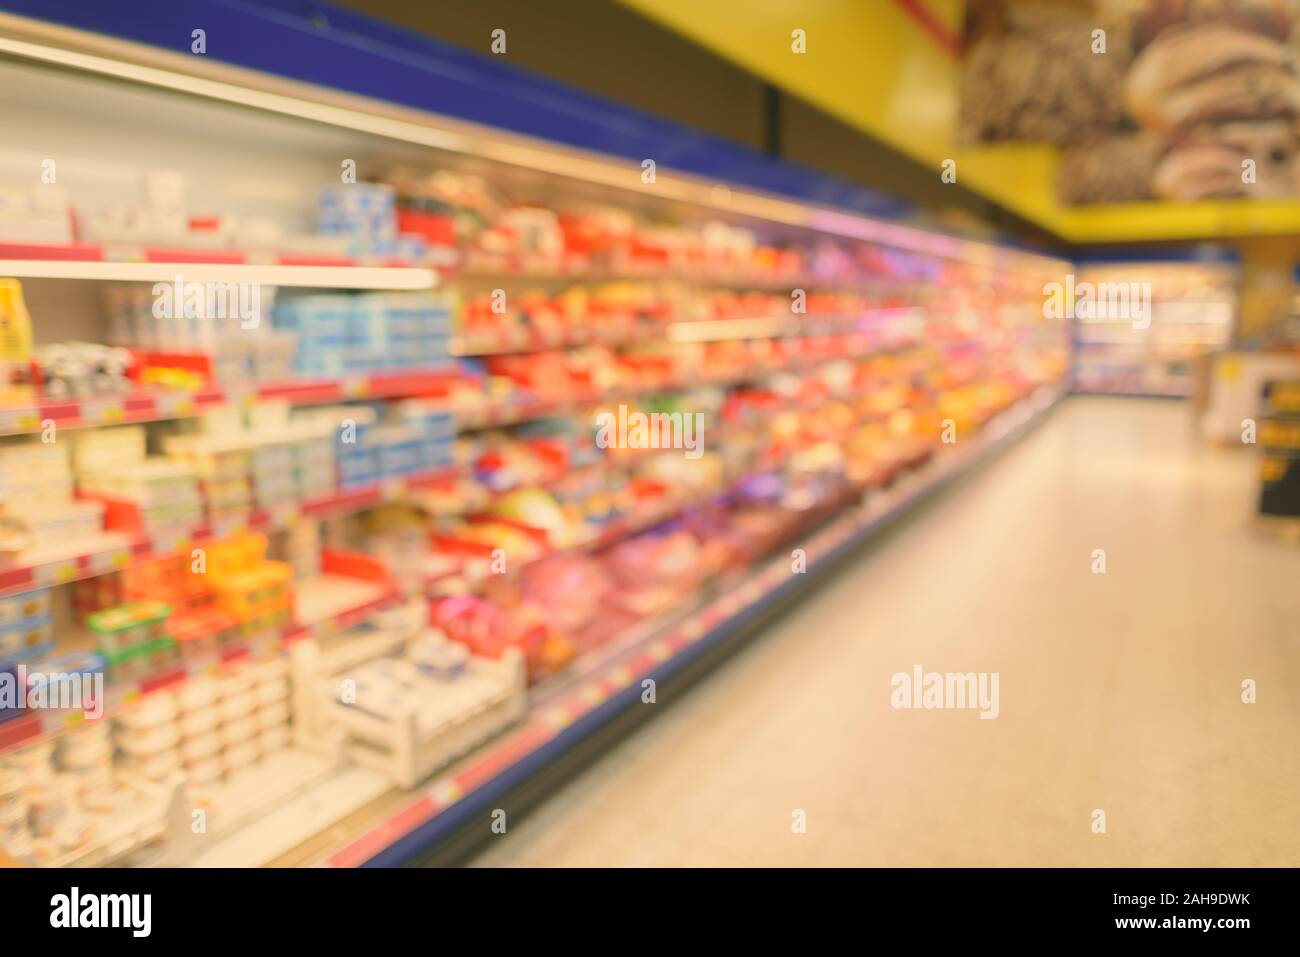 Defocused View Of Goods Inside Supermarket Stock Photo